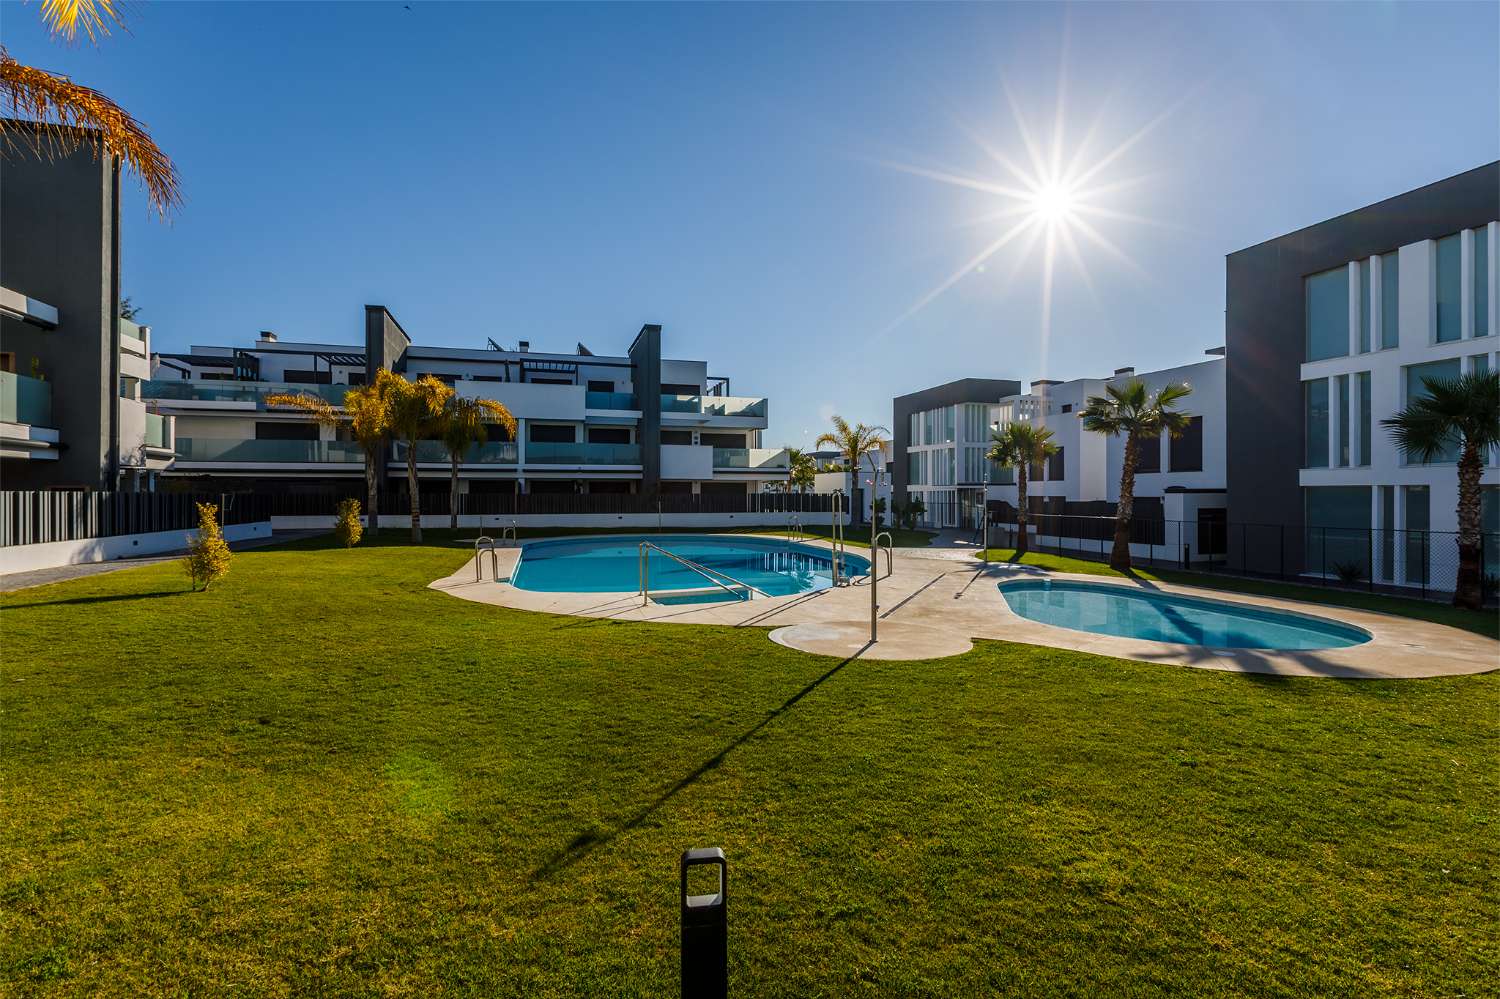 Three bedroom apartment, with garden, barbecue, and community pool next to the beach of Puerto de la Caleta